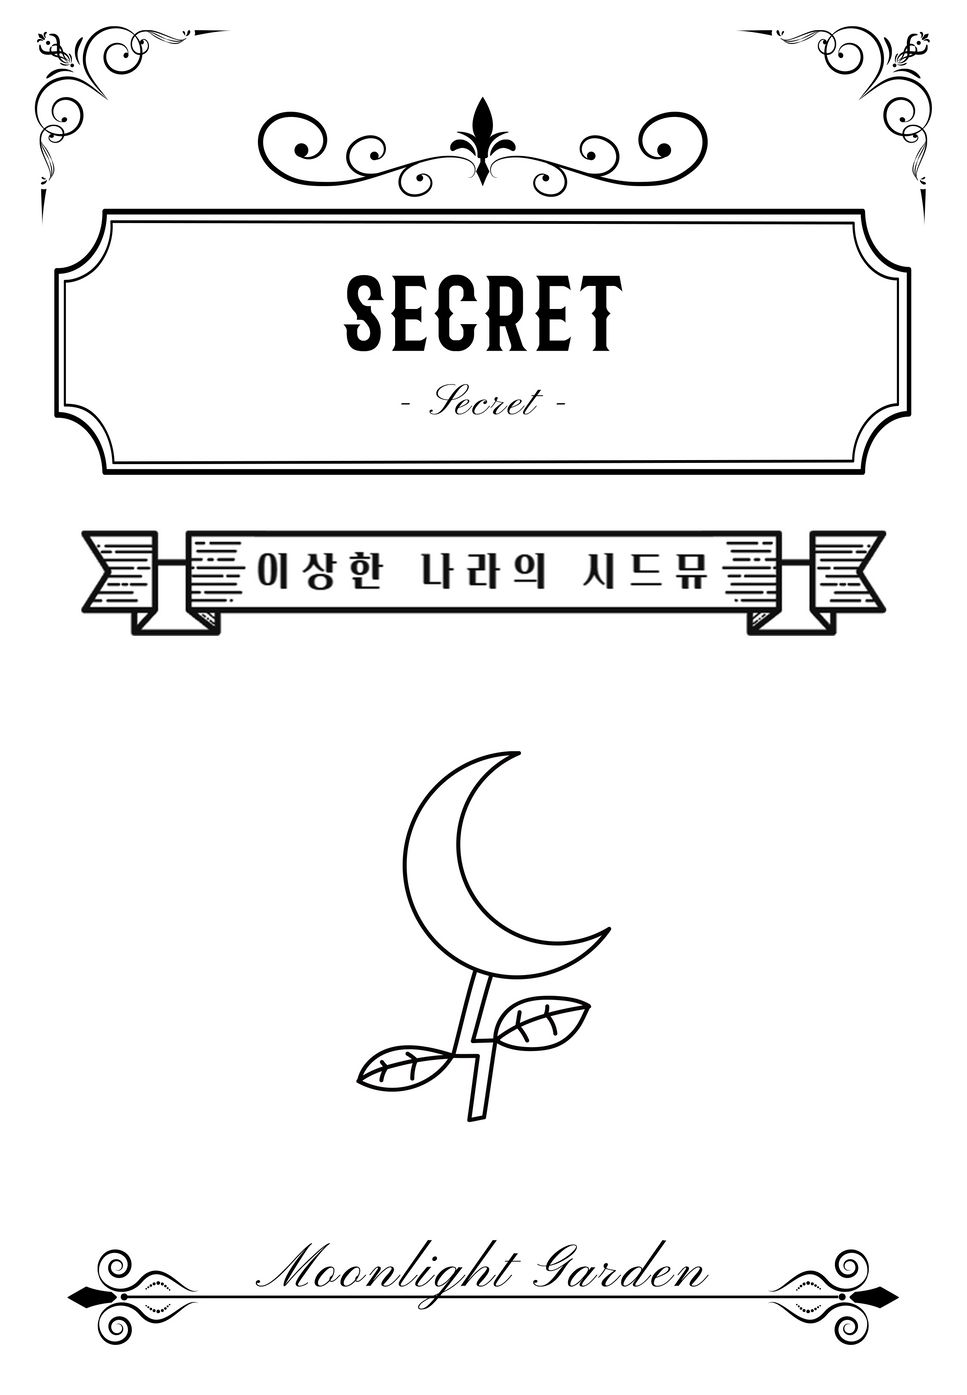 Secret OST - Secret by Moonlight garden